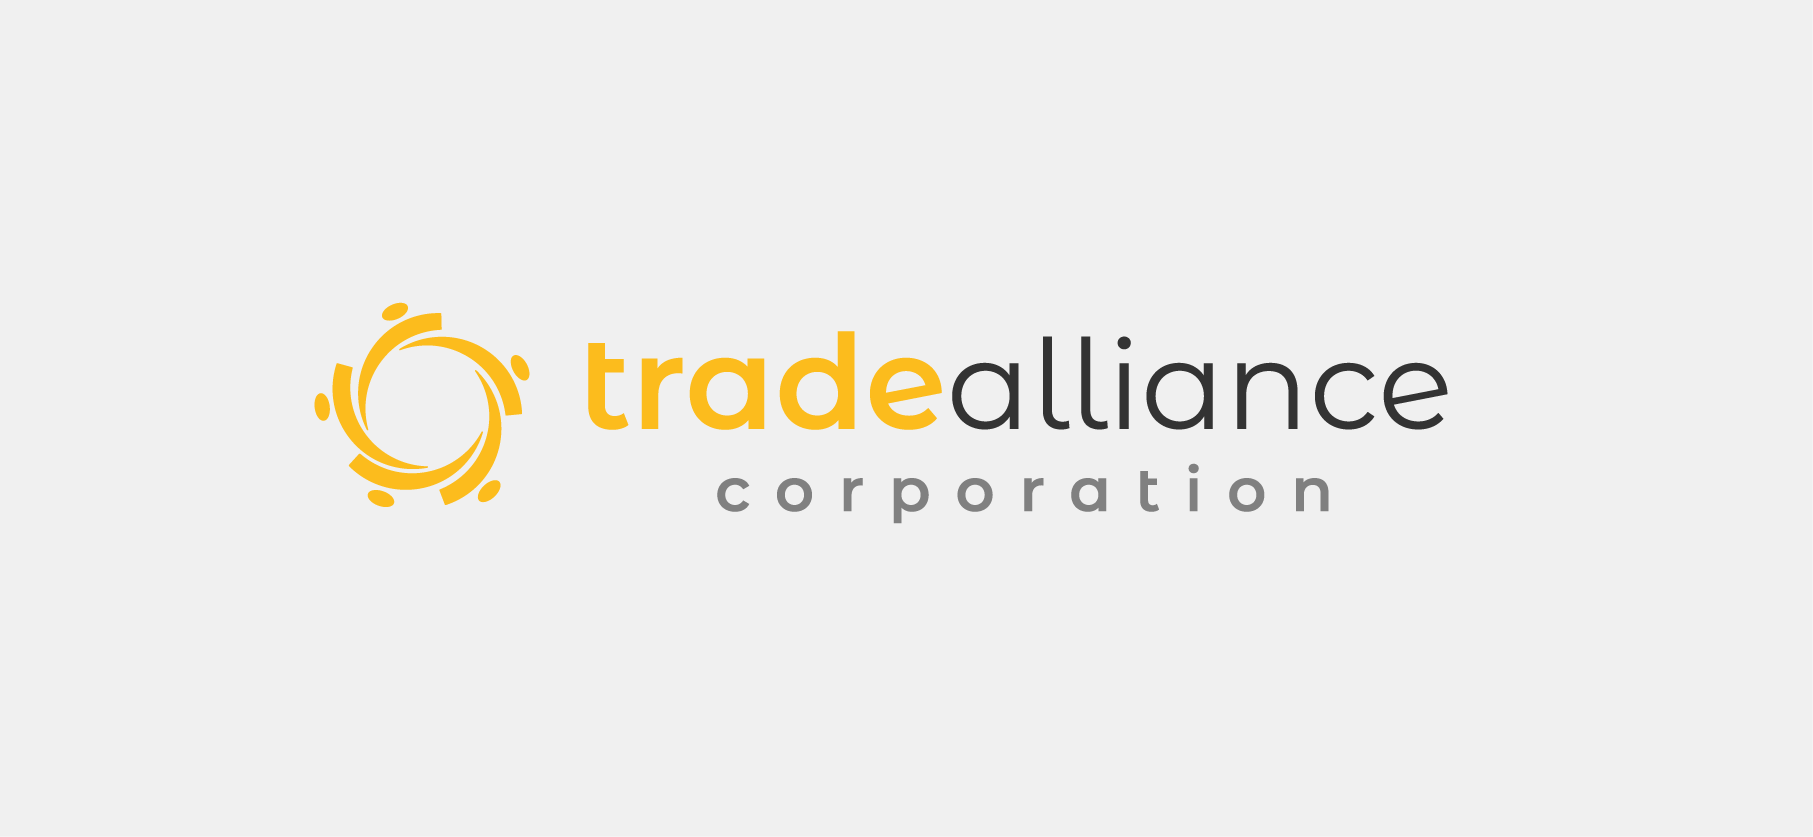 Ofertas de empleo en Trade Alliance Corporation.